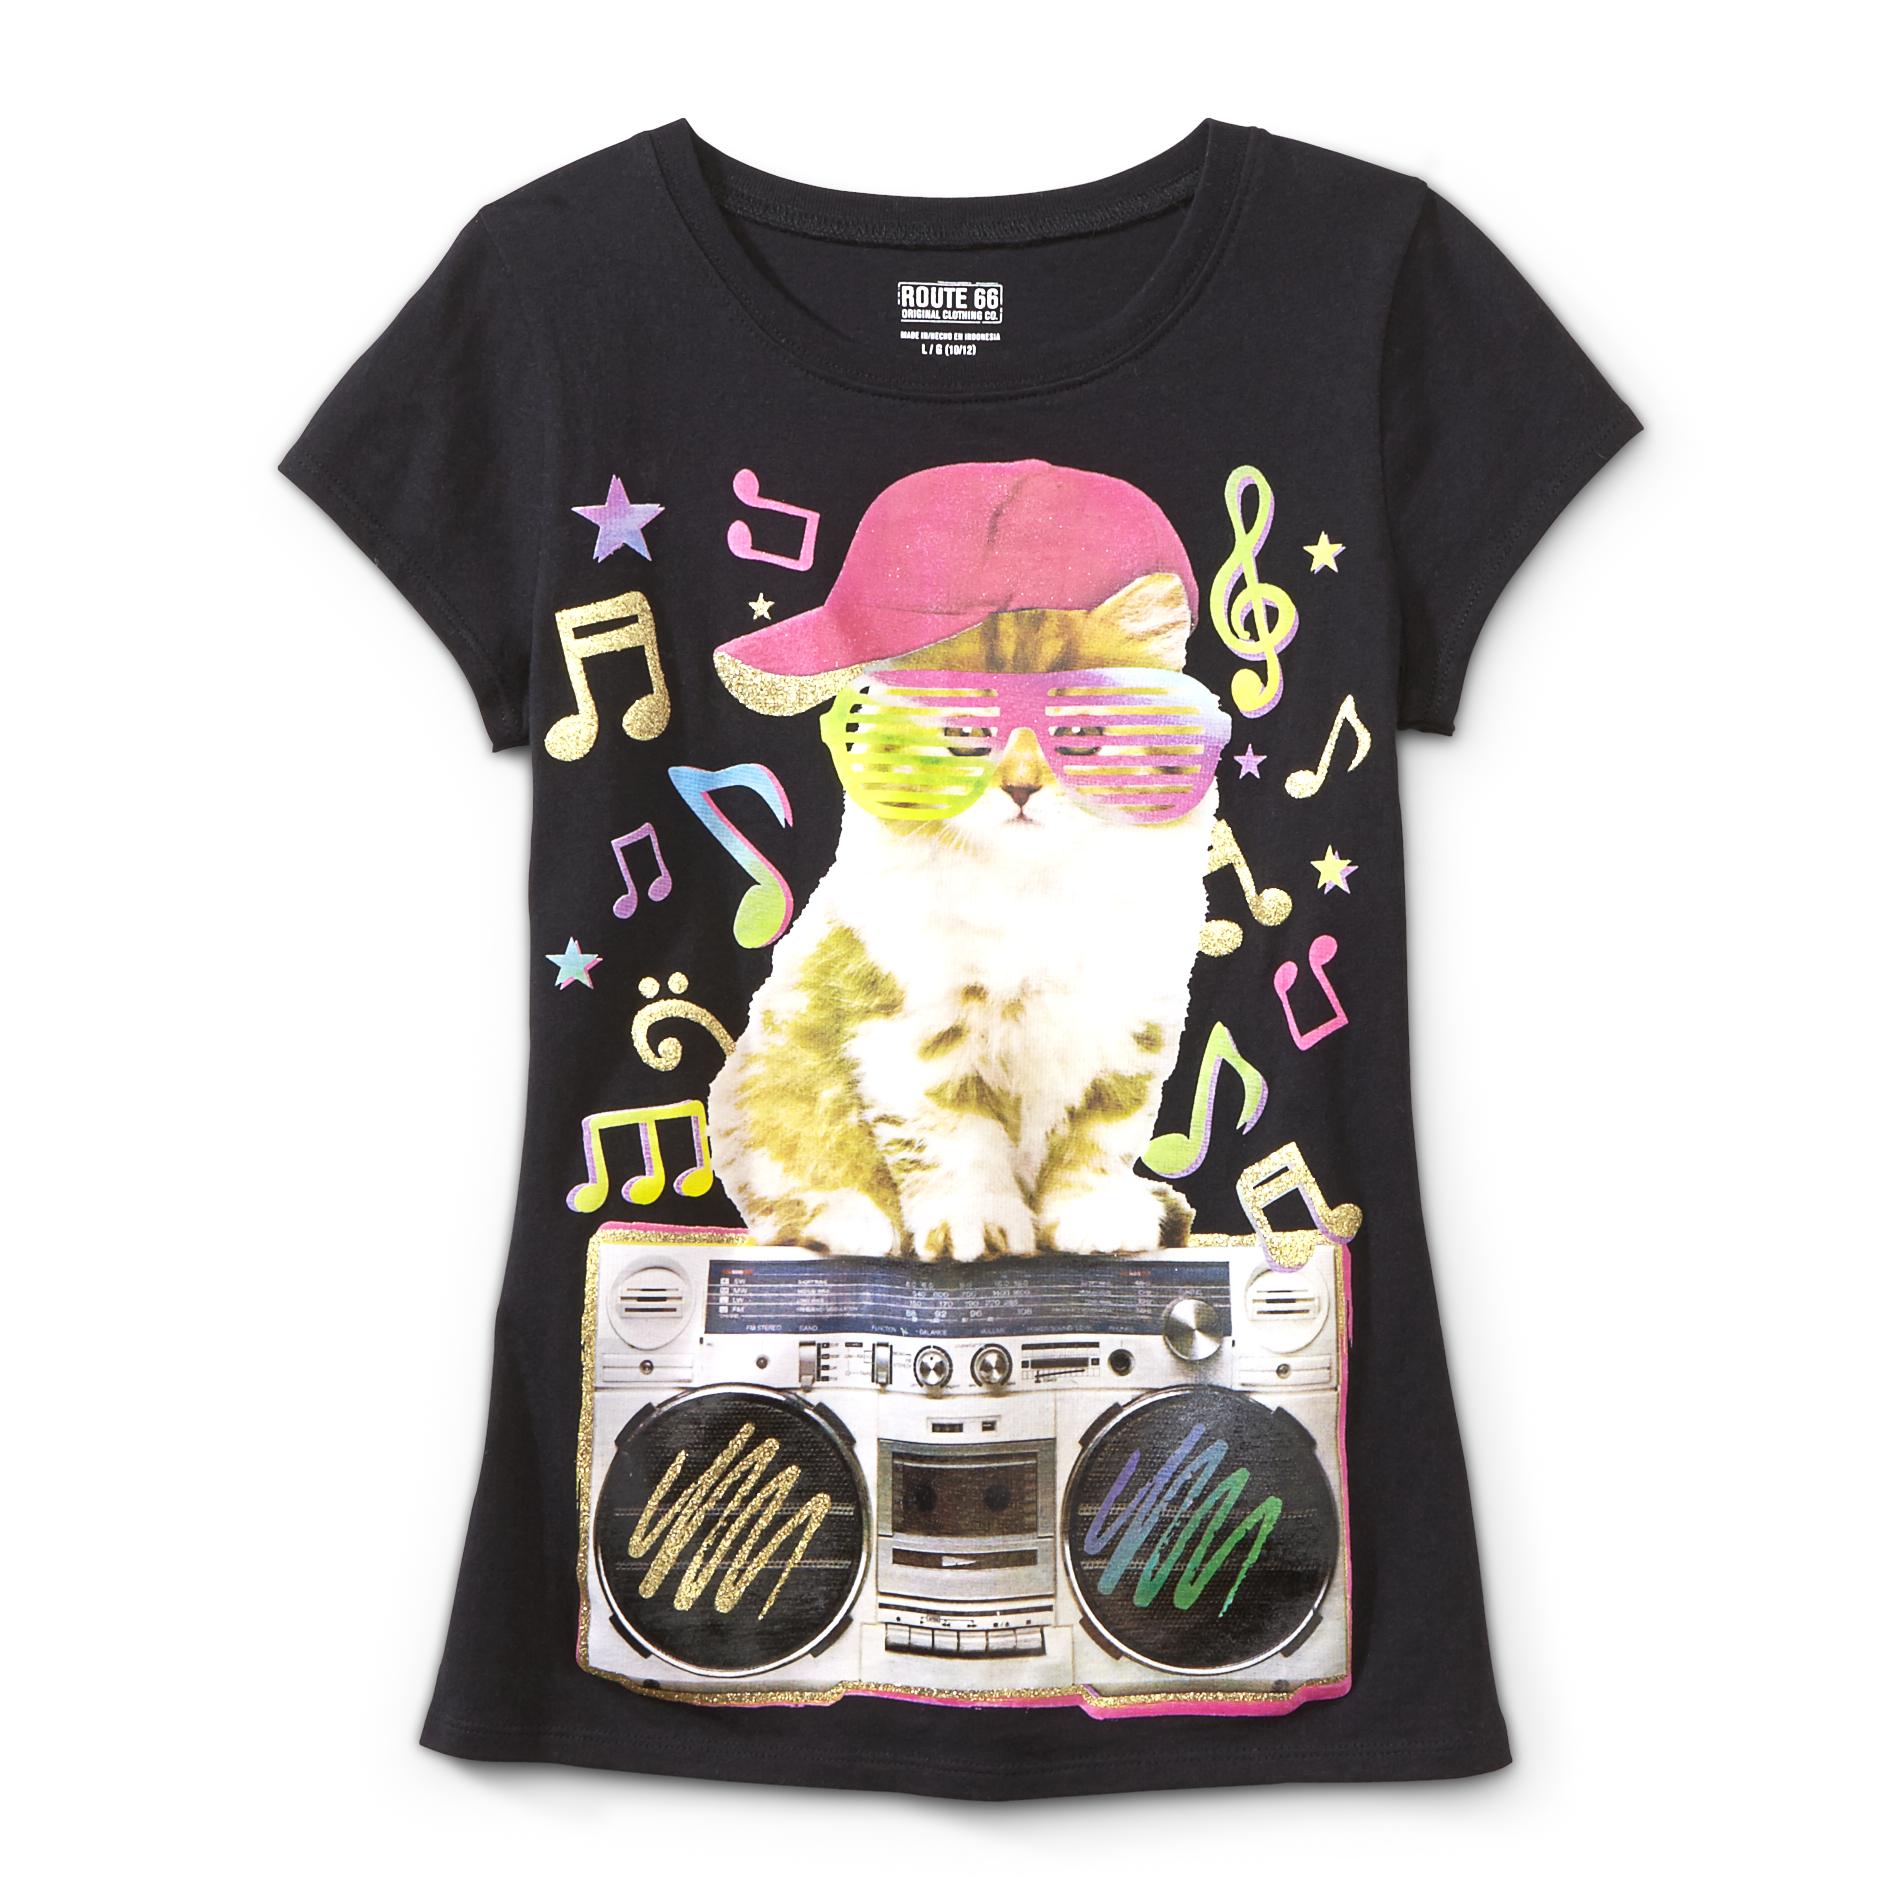 Route 66 Girl's Graphic T-Shirt - Boombox Kitten